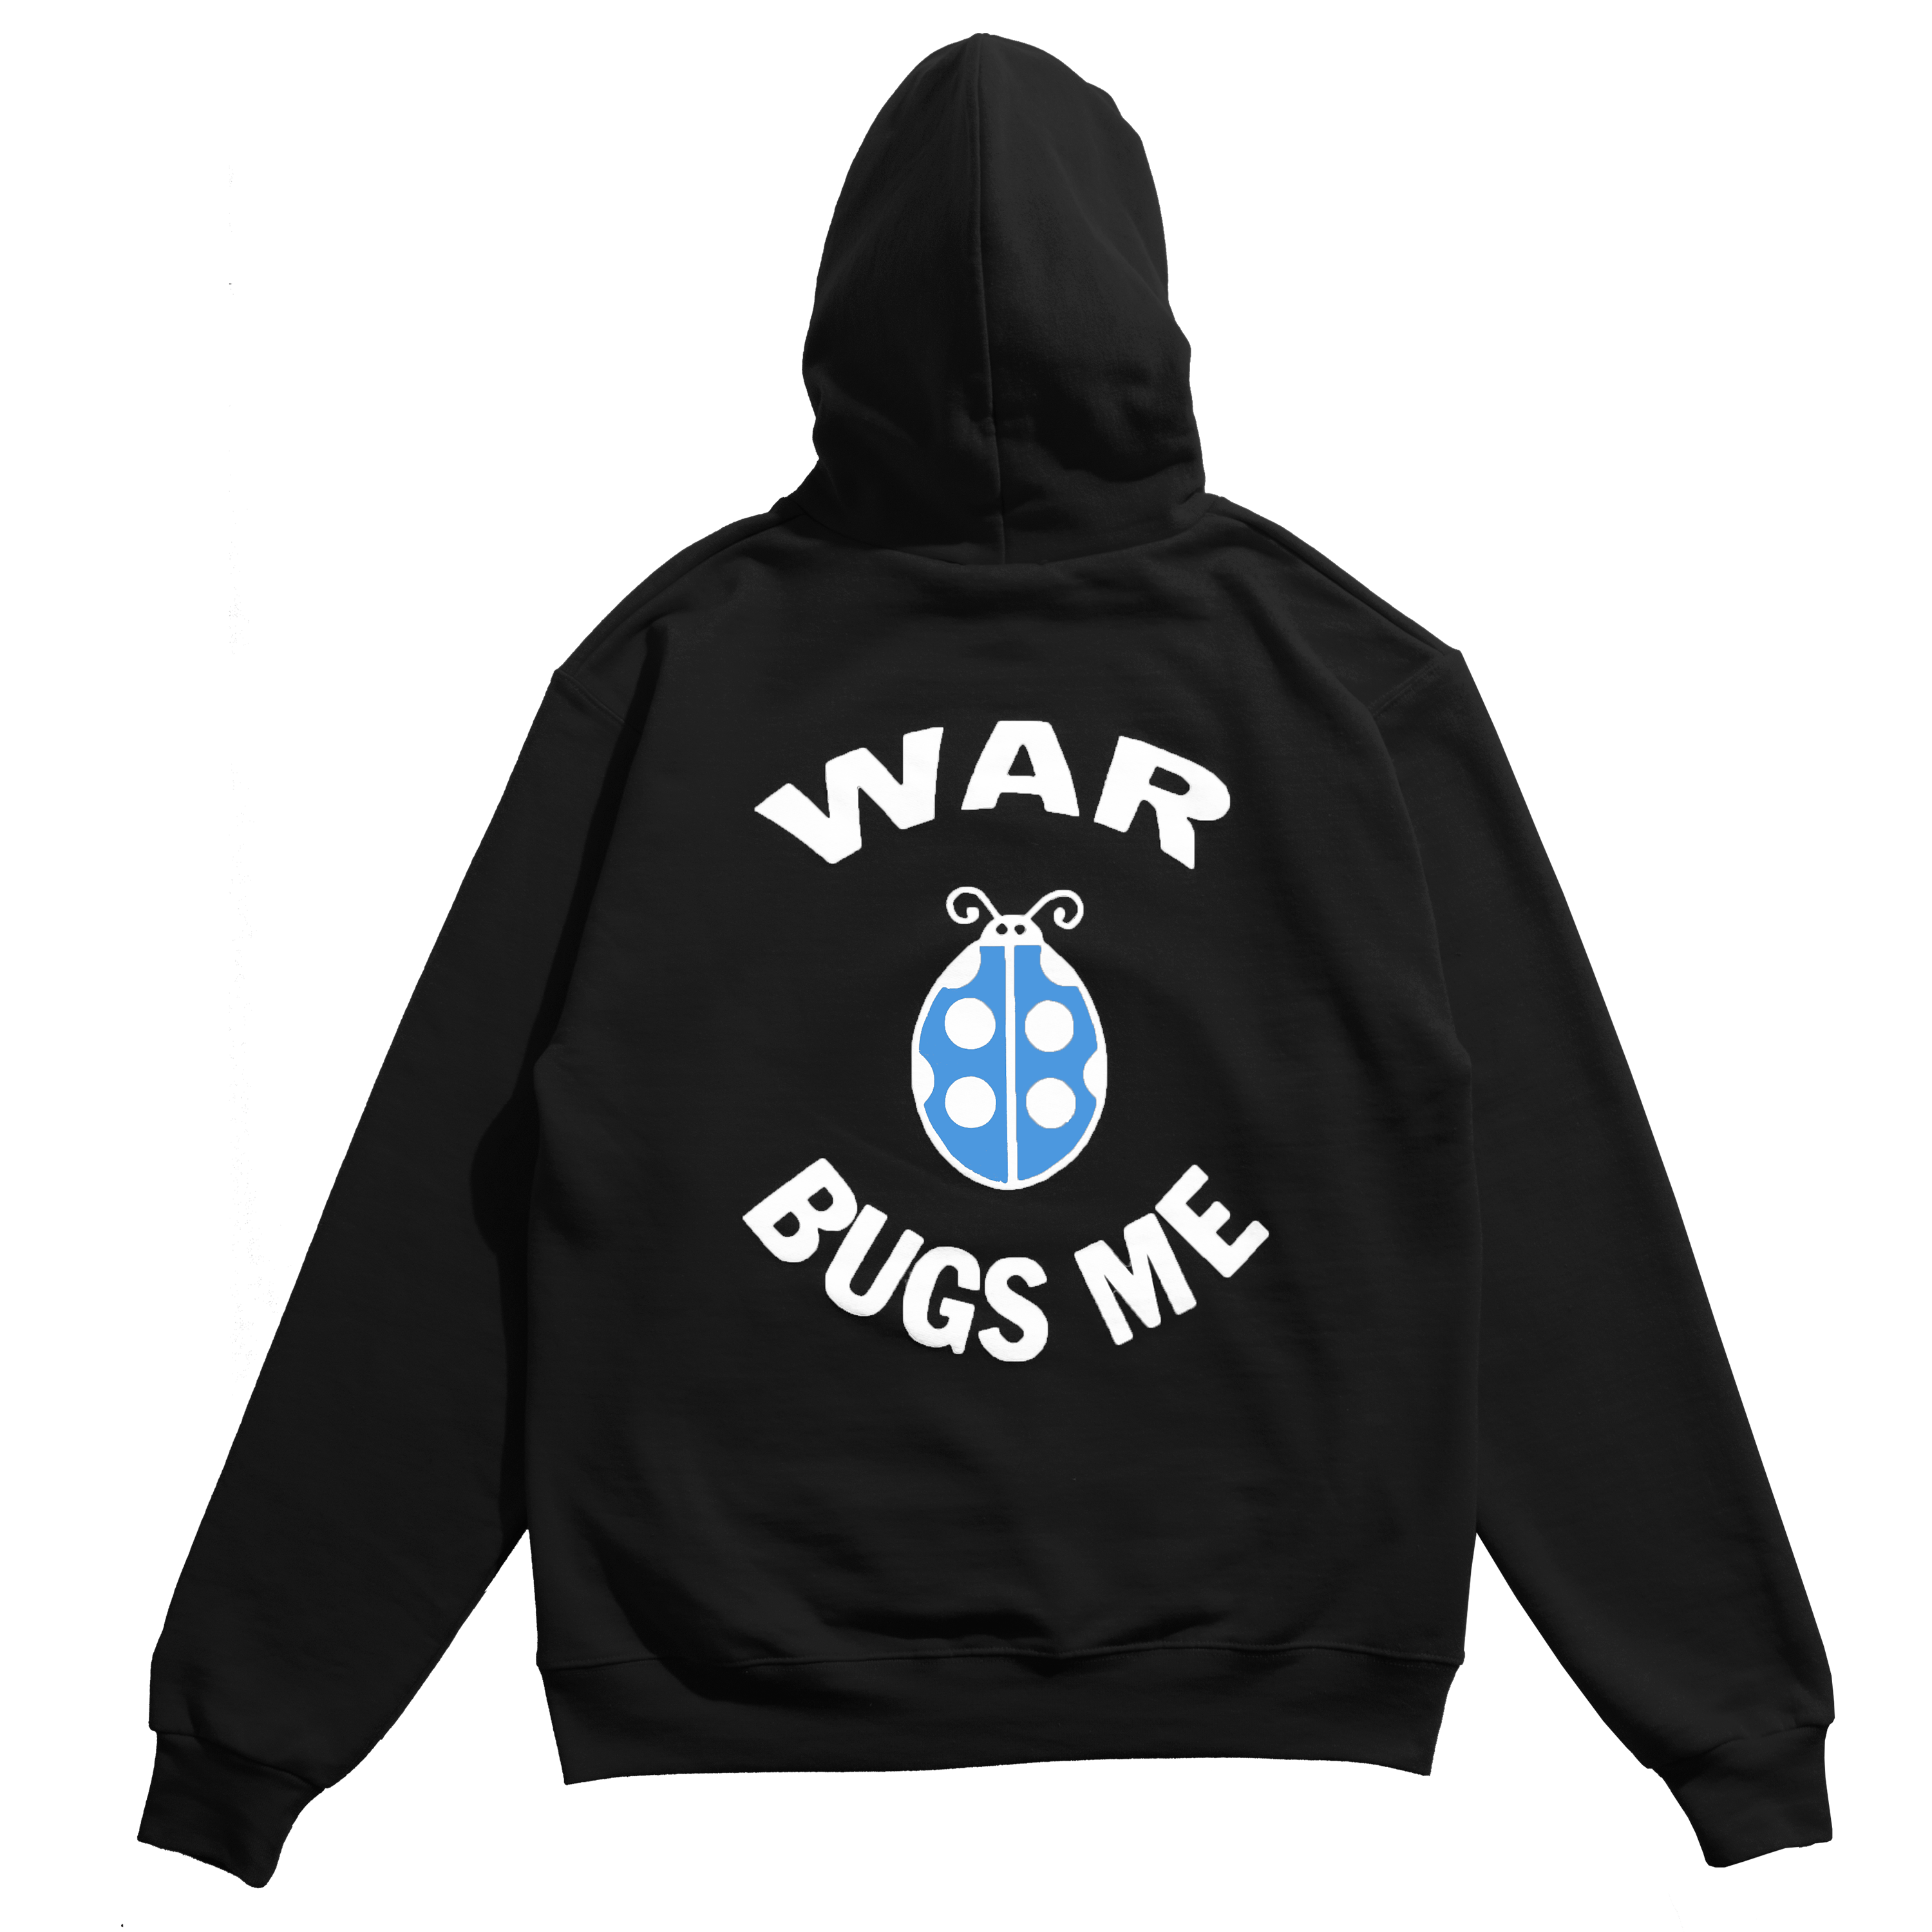 war bugs me - War Bugs Me - Logo Hooded Sweatshirt - Black